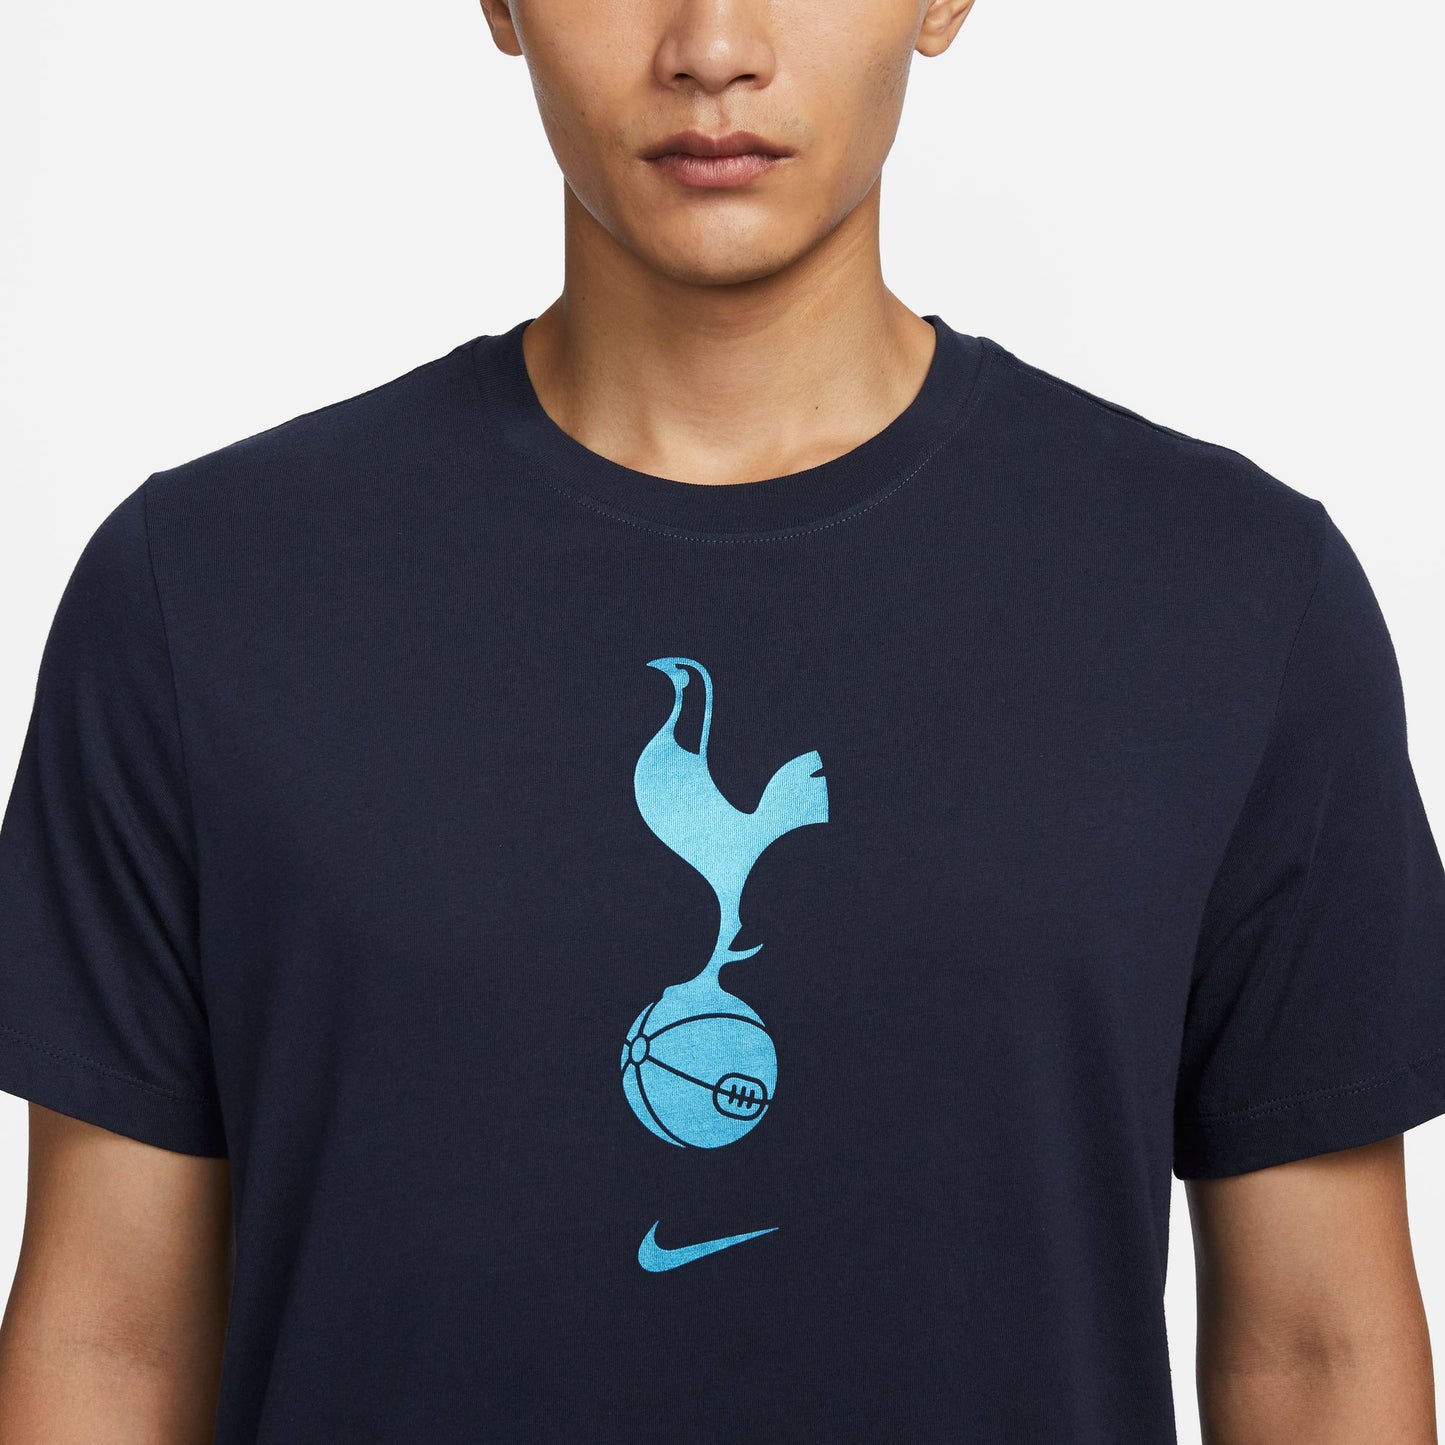 Tottenham Hotspur Crest Tee